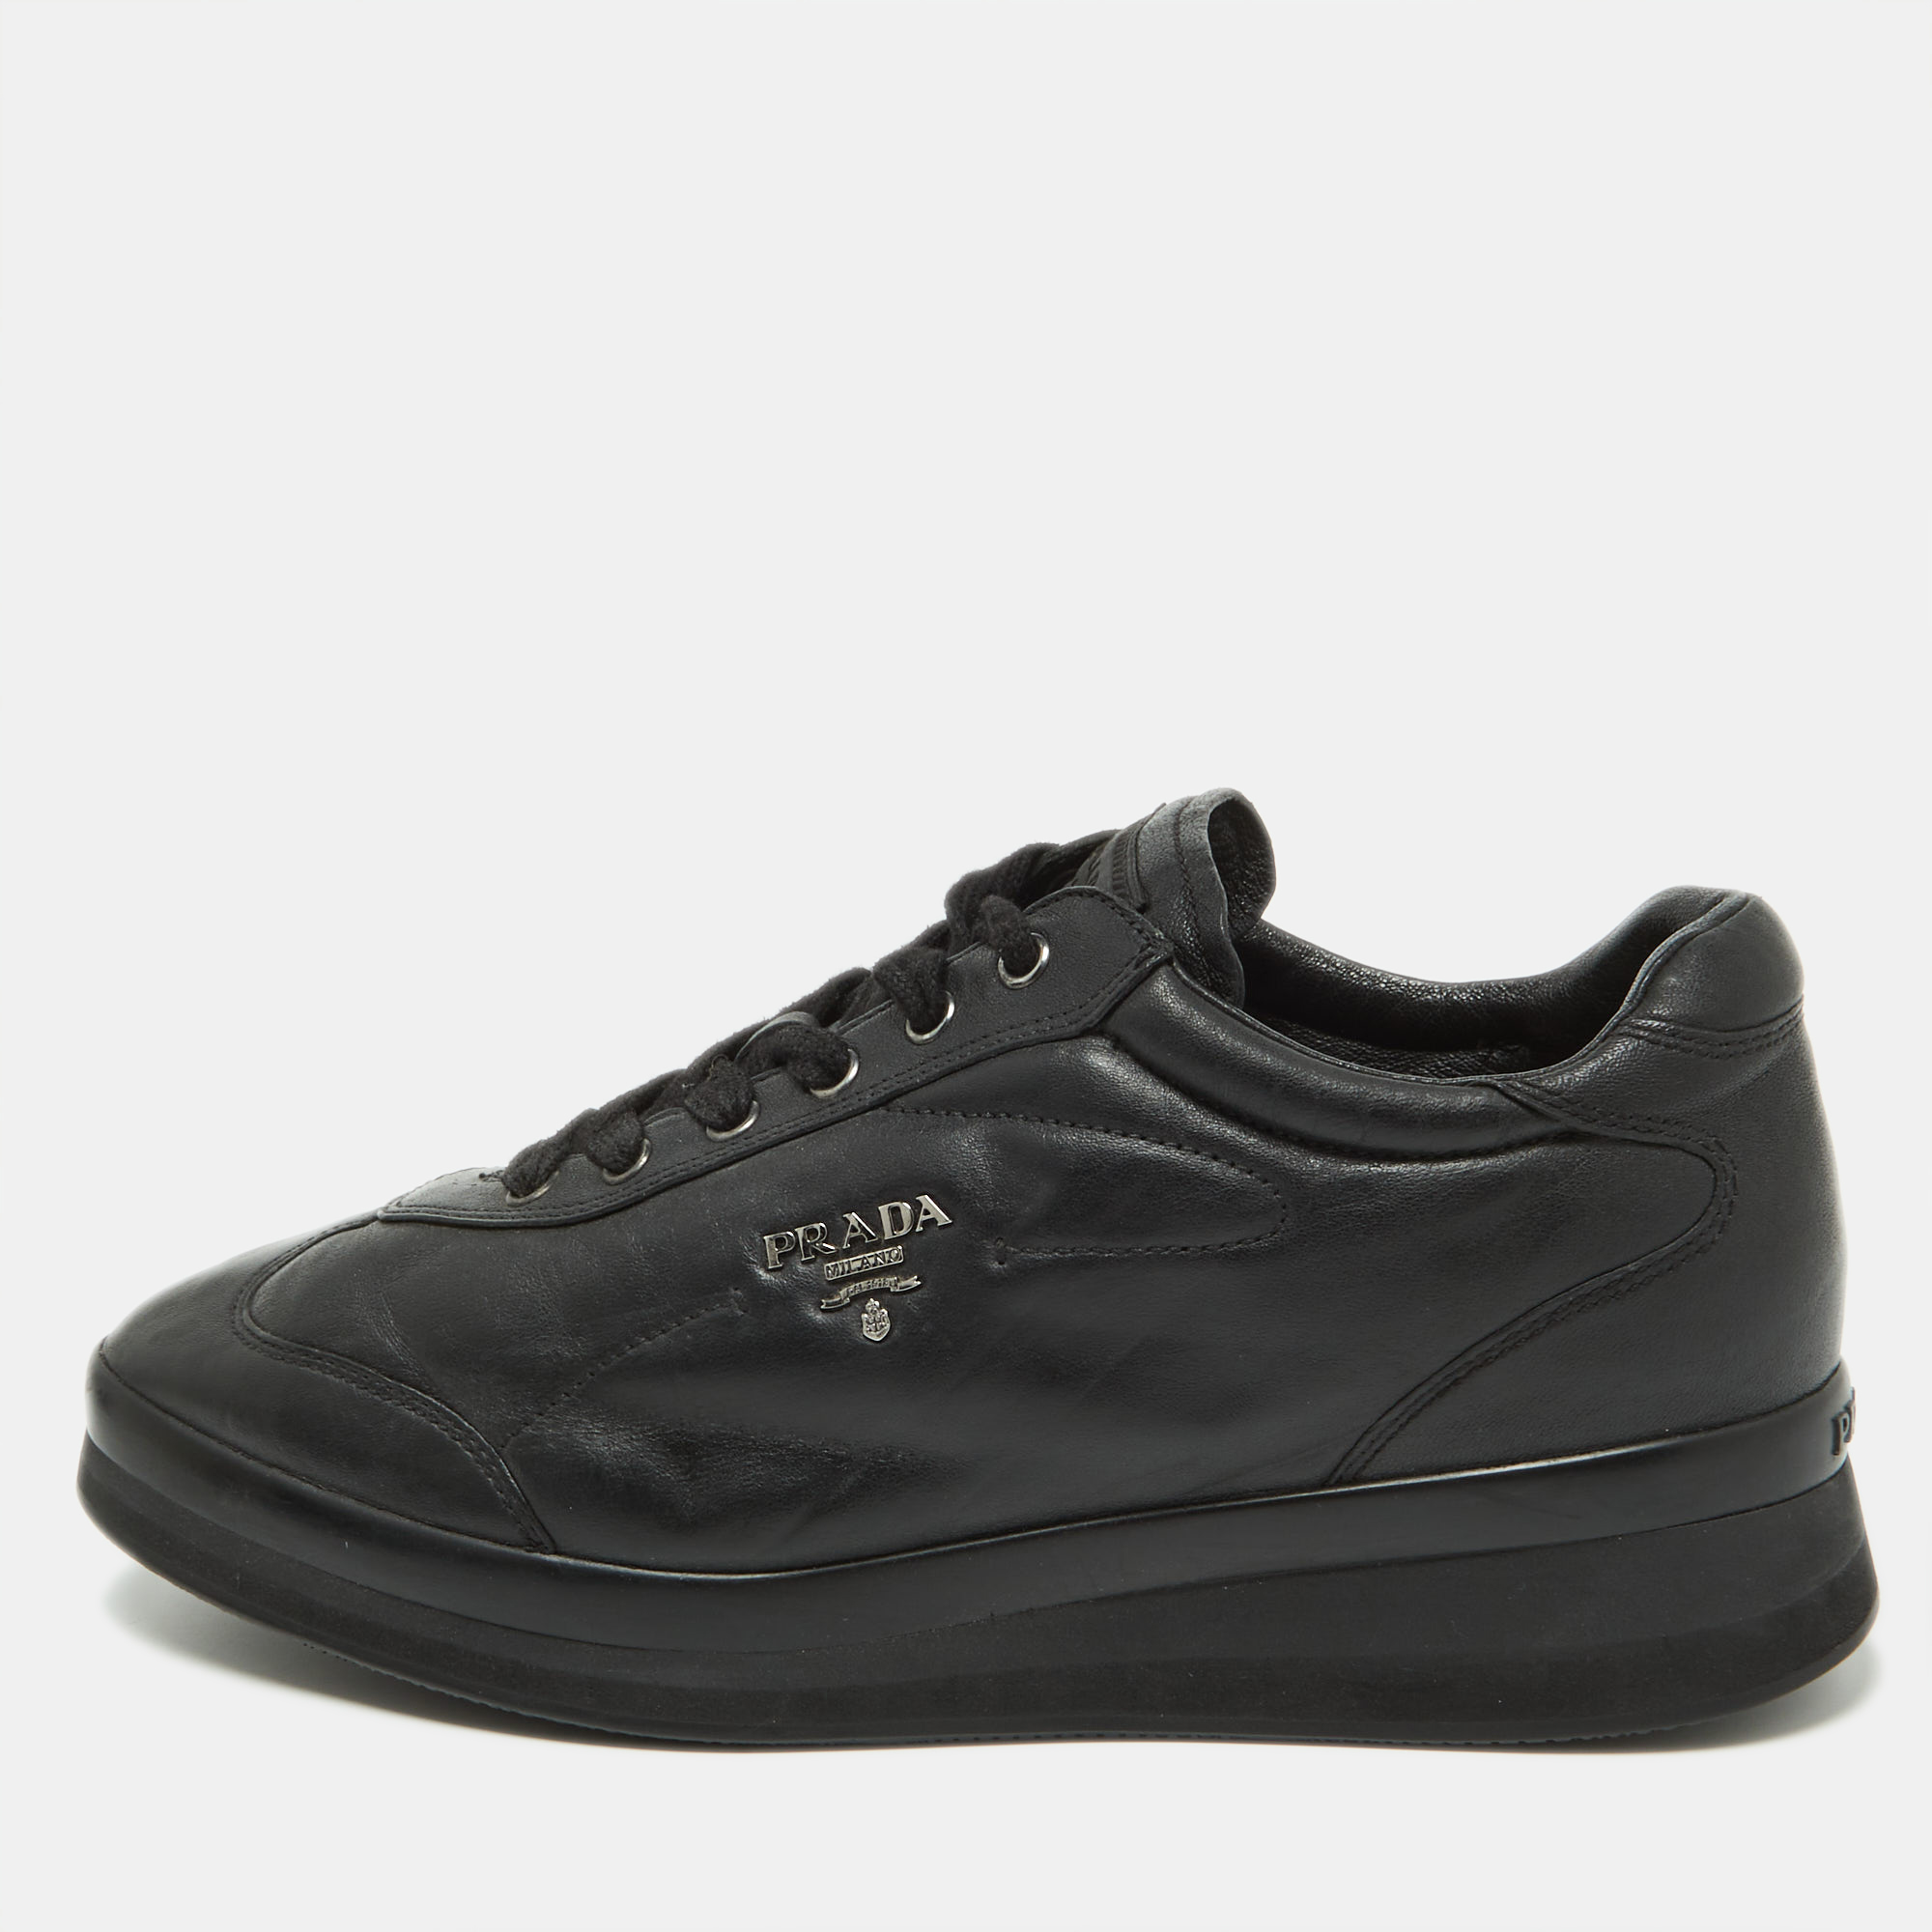 

Prada Black Leather Low Top Sneakers Size